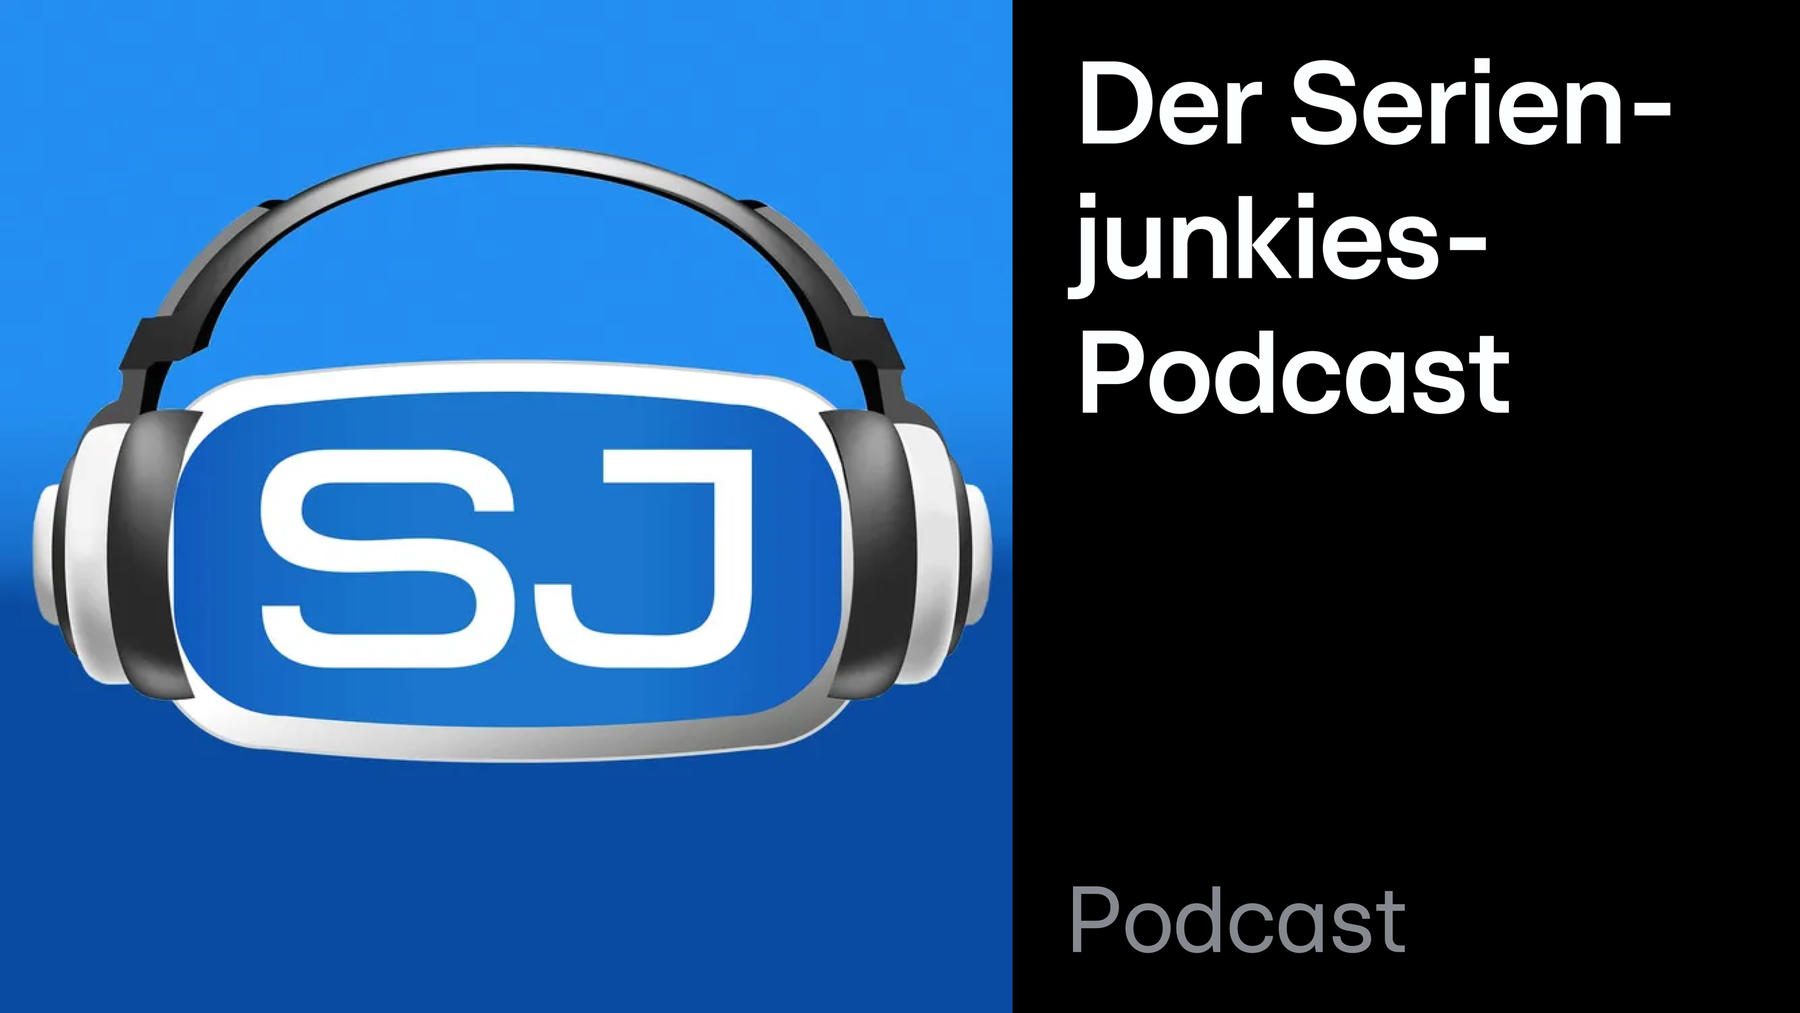 Podcast: Der Serienjunkies-Podcast